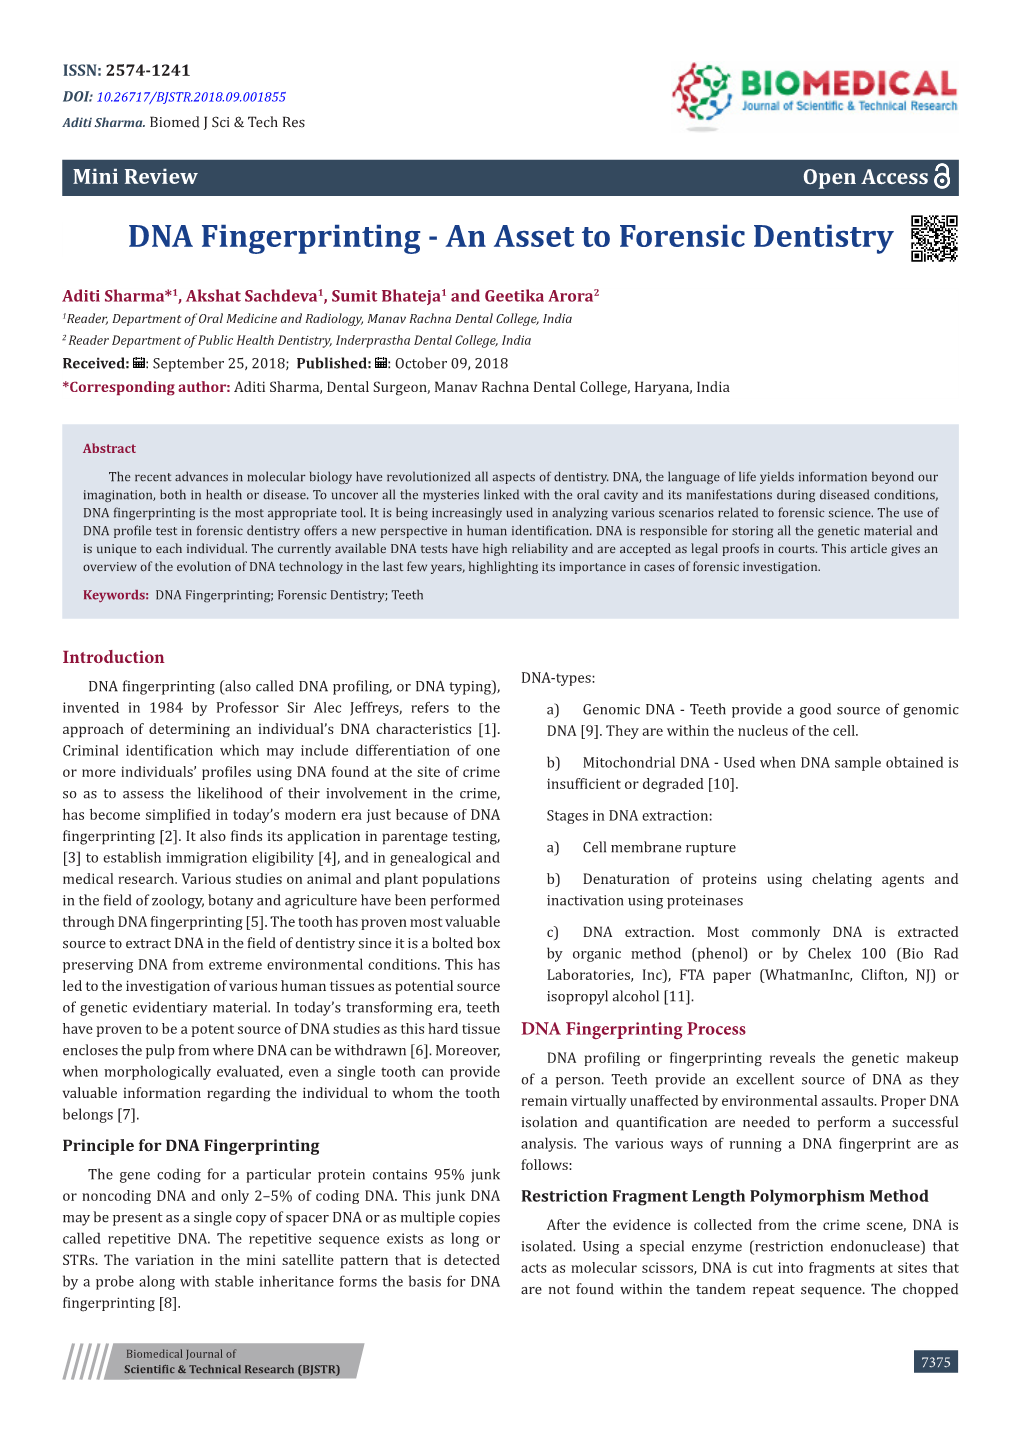 DNA Fingerprinting - an Asset to Forensic Dentistry